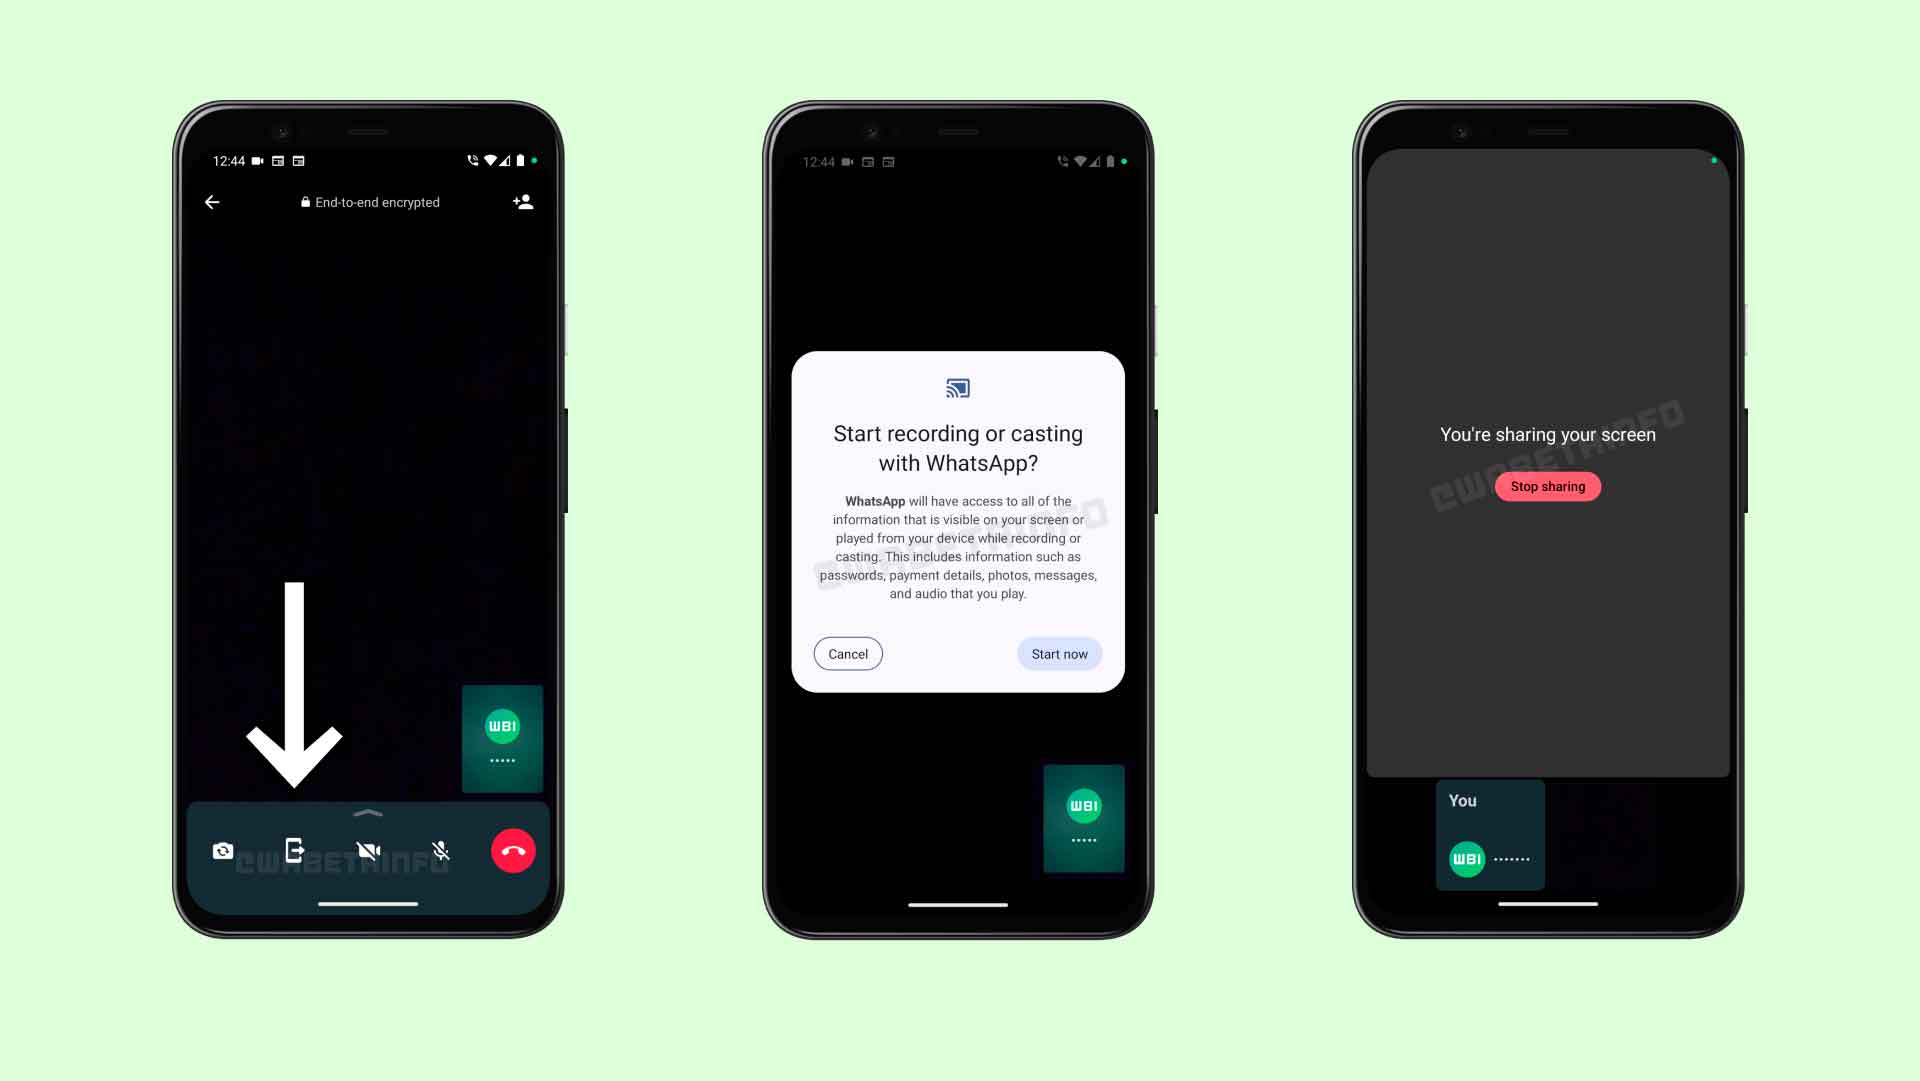 WhatsApp will allow screen sharing